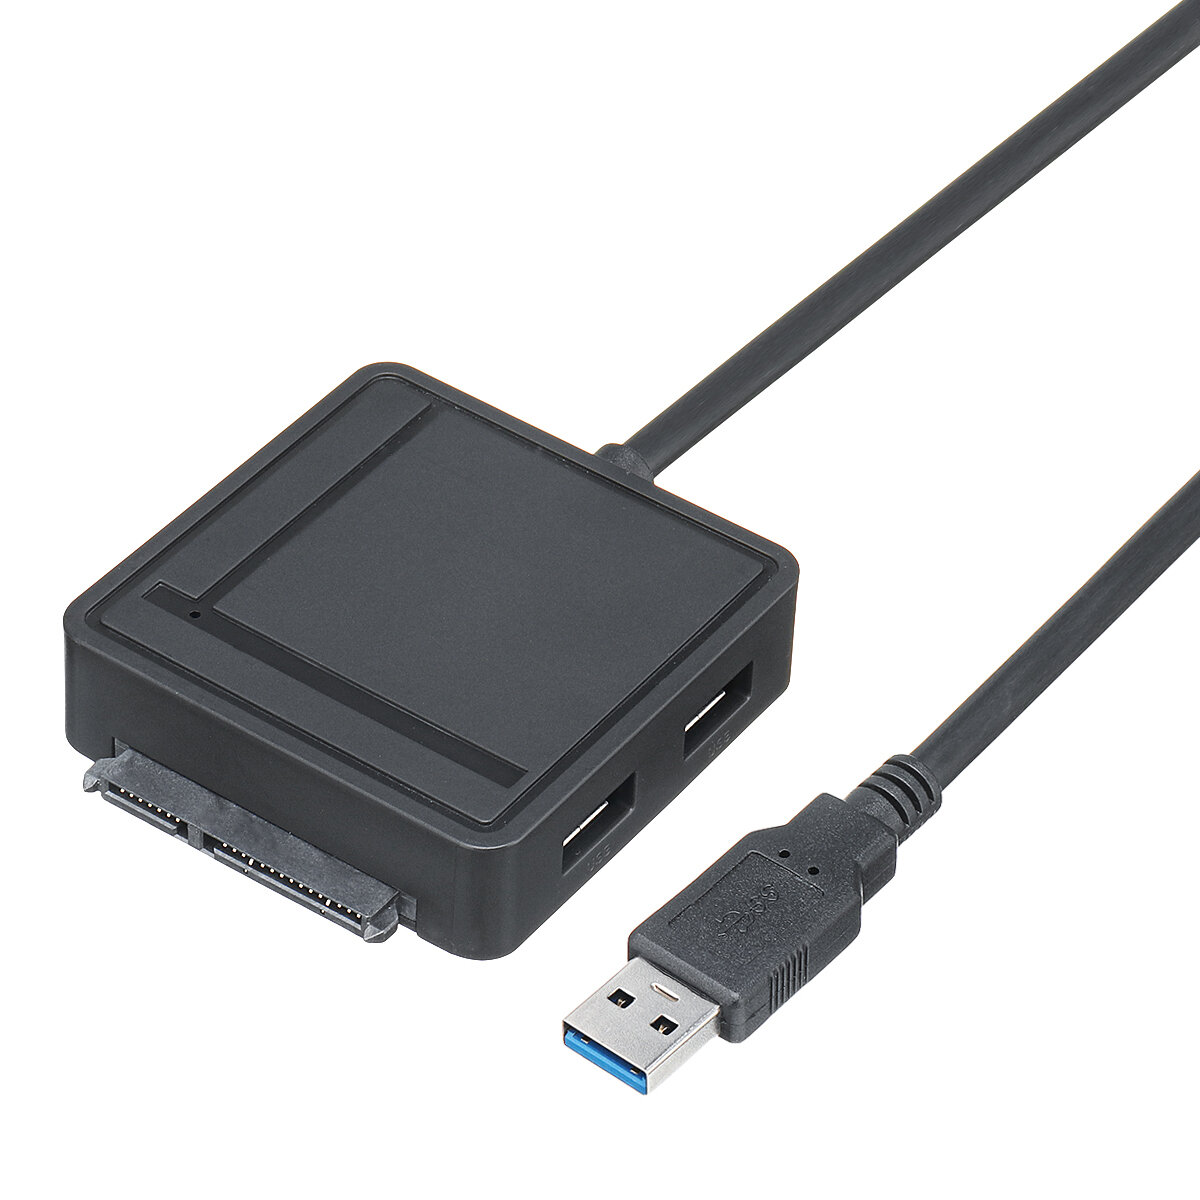 5-In-1 Multifunctioneel USB 3.0 Docking Station SATA III Adapter met USB Hub Kaartlezer met USB 3.0 